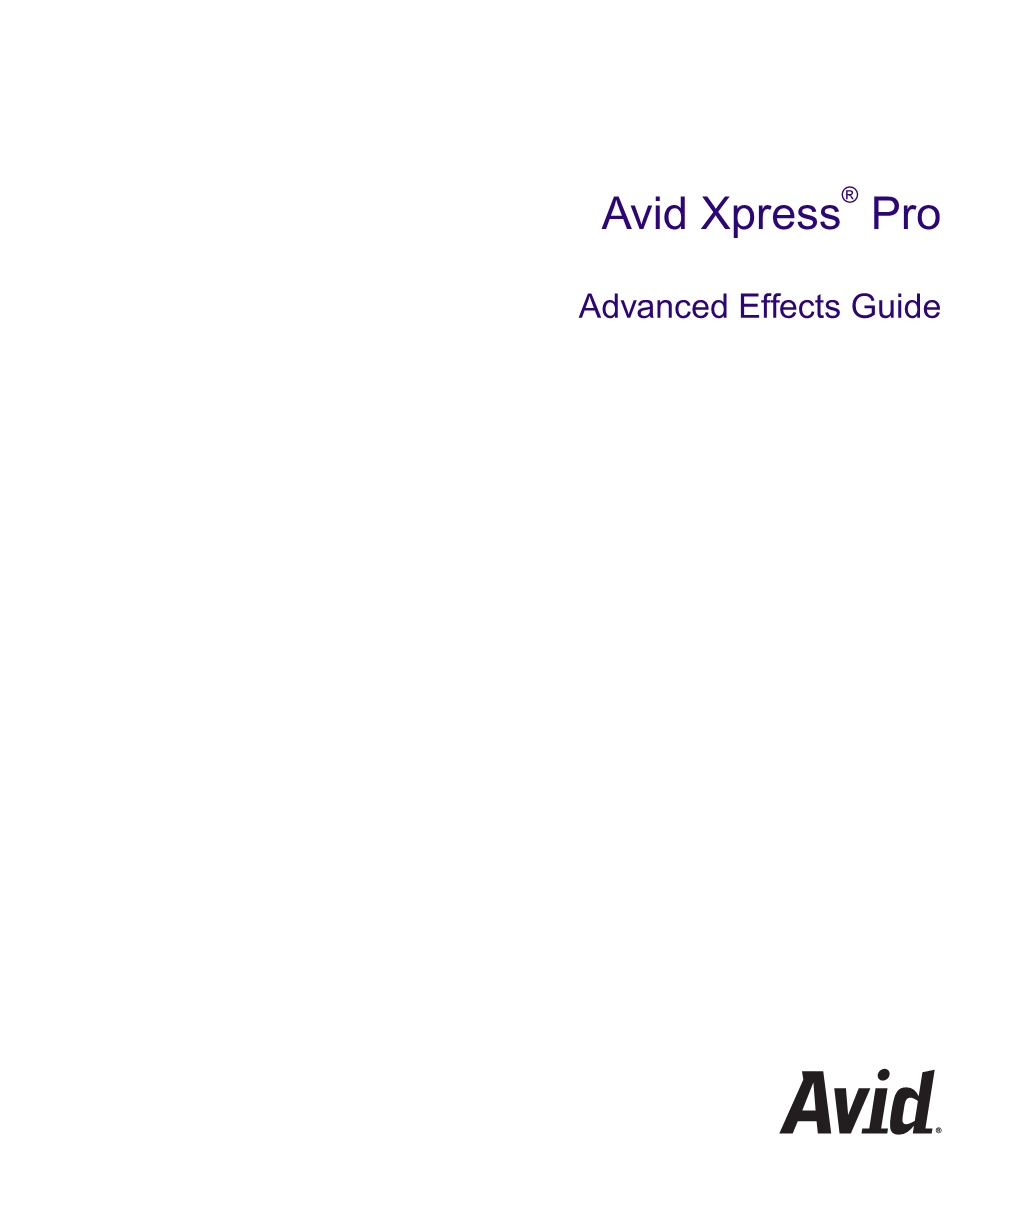 Avid Xpress Pro Advanced Effects Guide • Part 0130-07616-01• June 2006